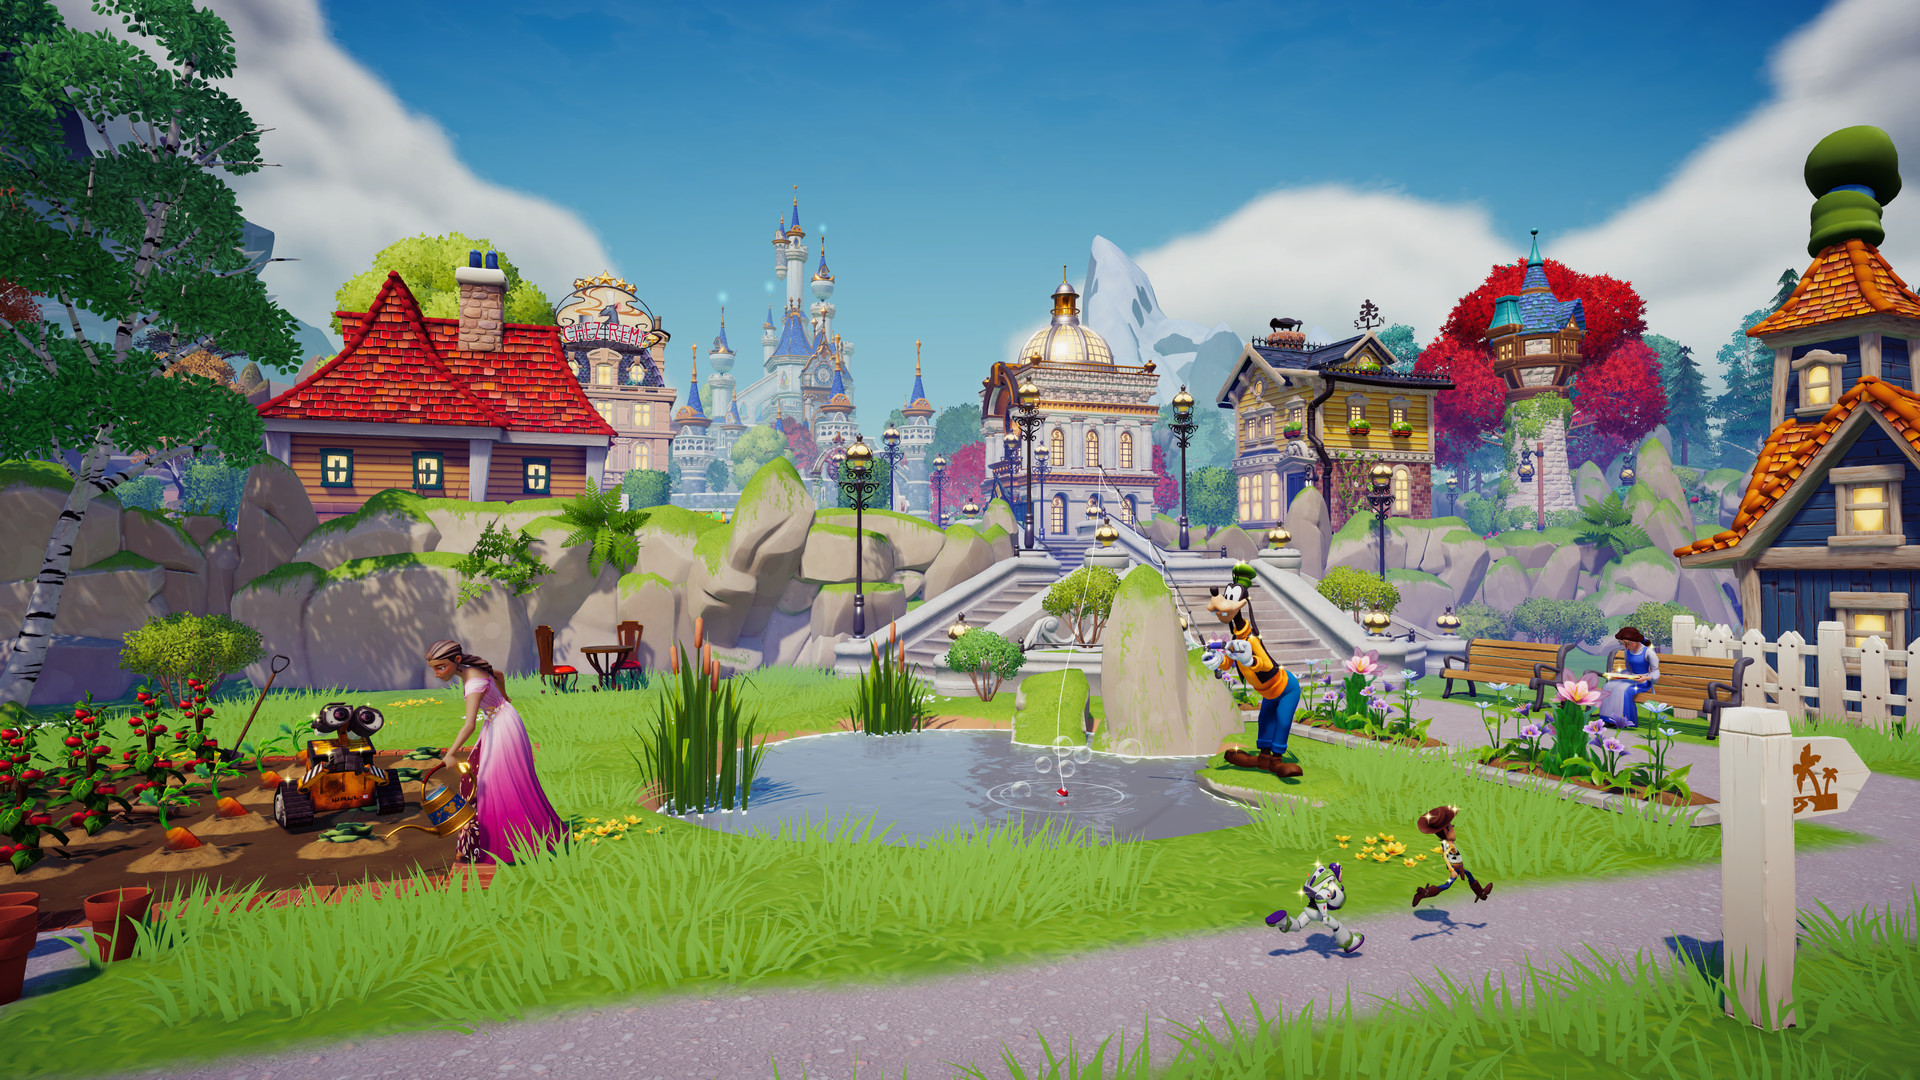 Disney Dreamlight Valley Gold Edition Steam Altergift